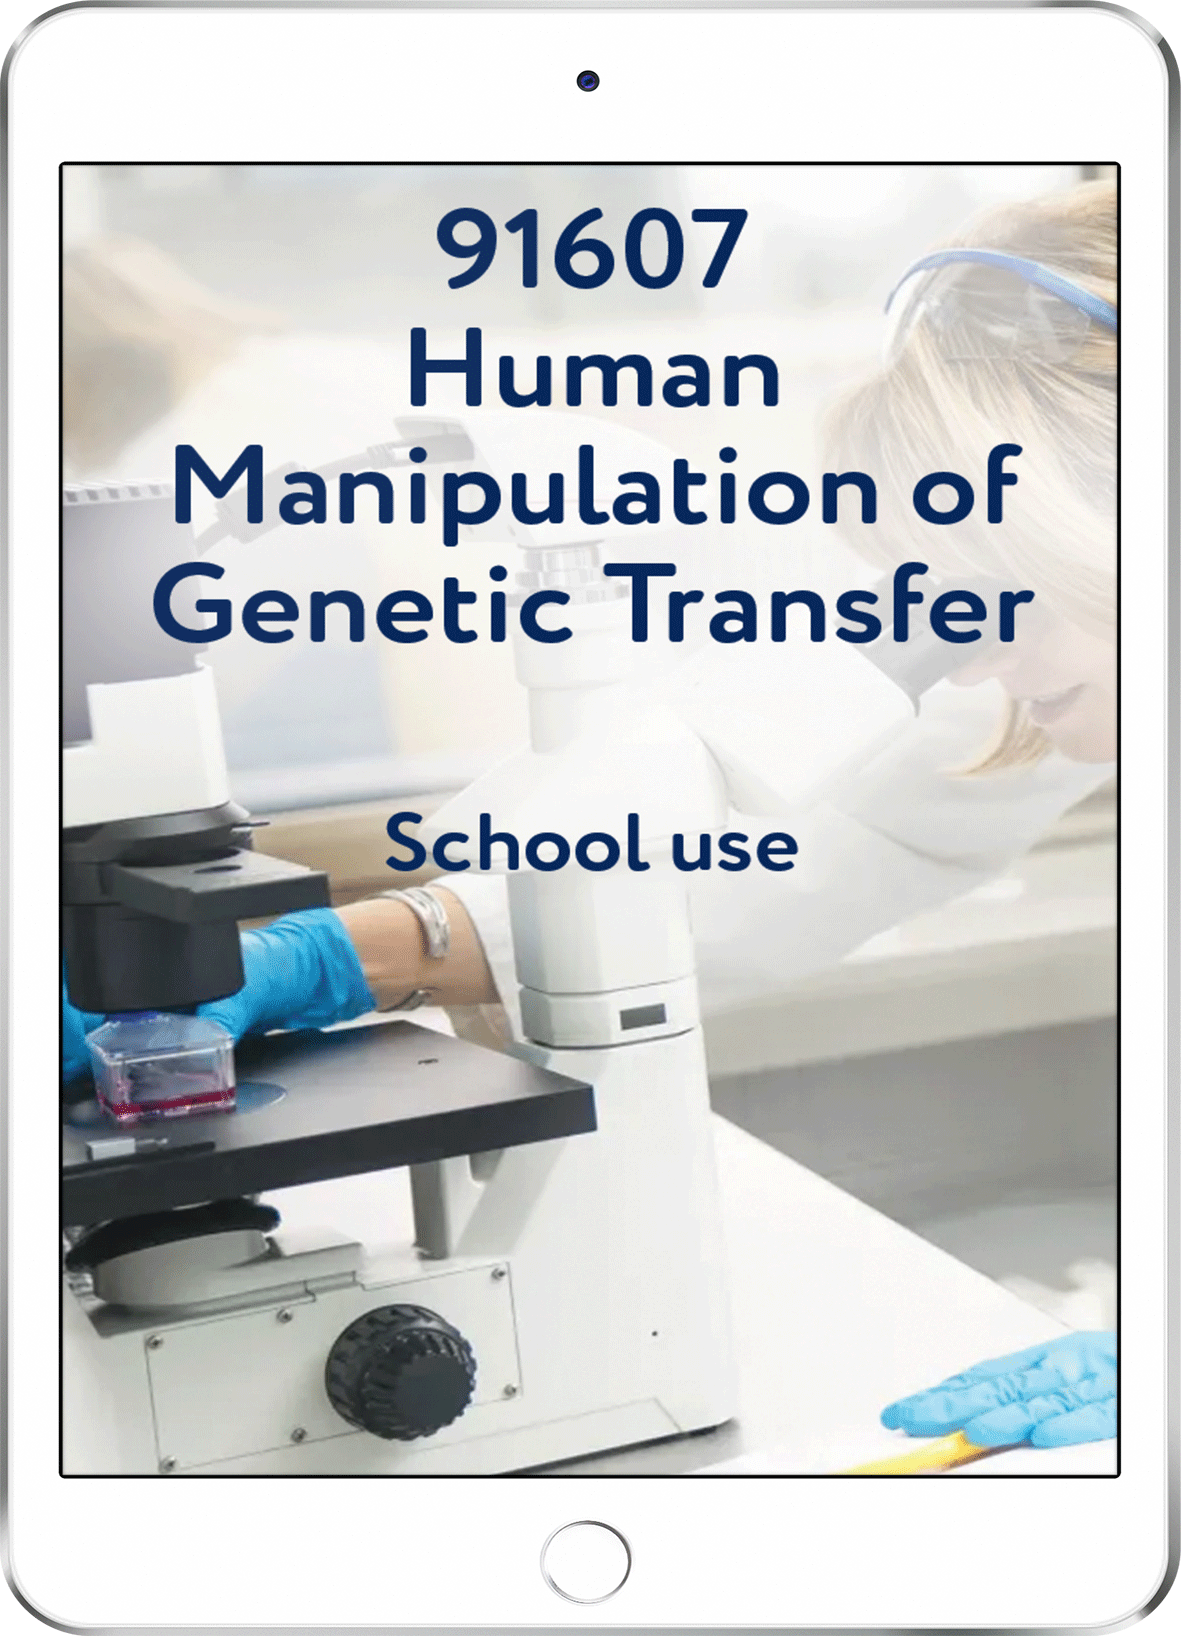 91607 Human Manipulation of Genetic Transfer - School Use